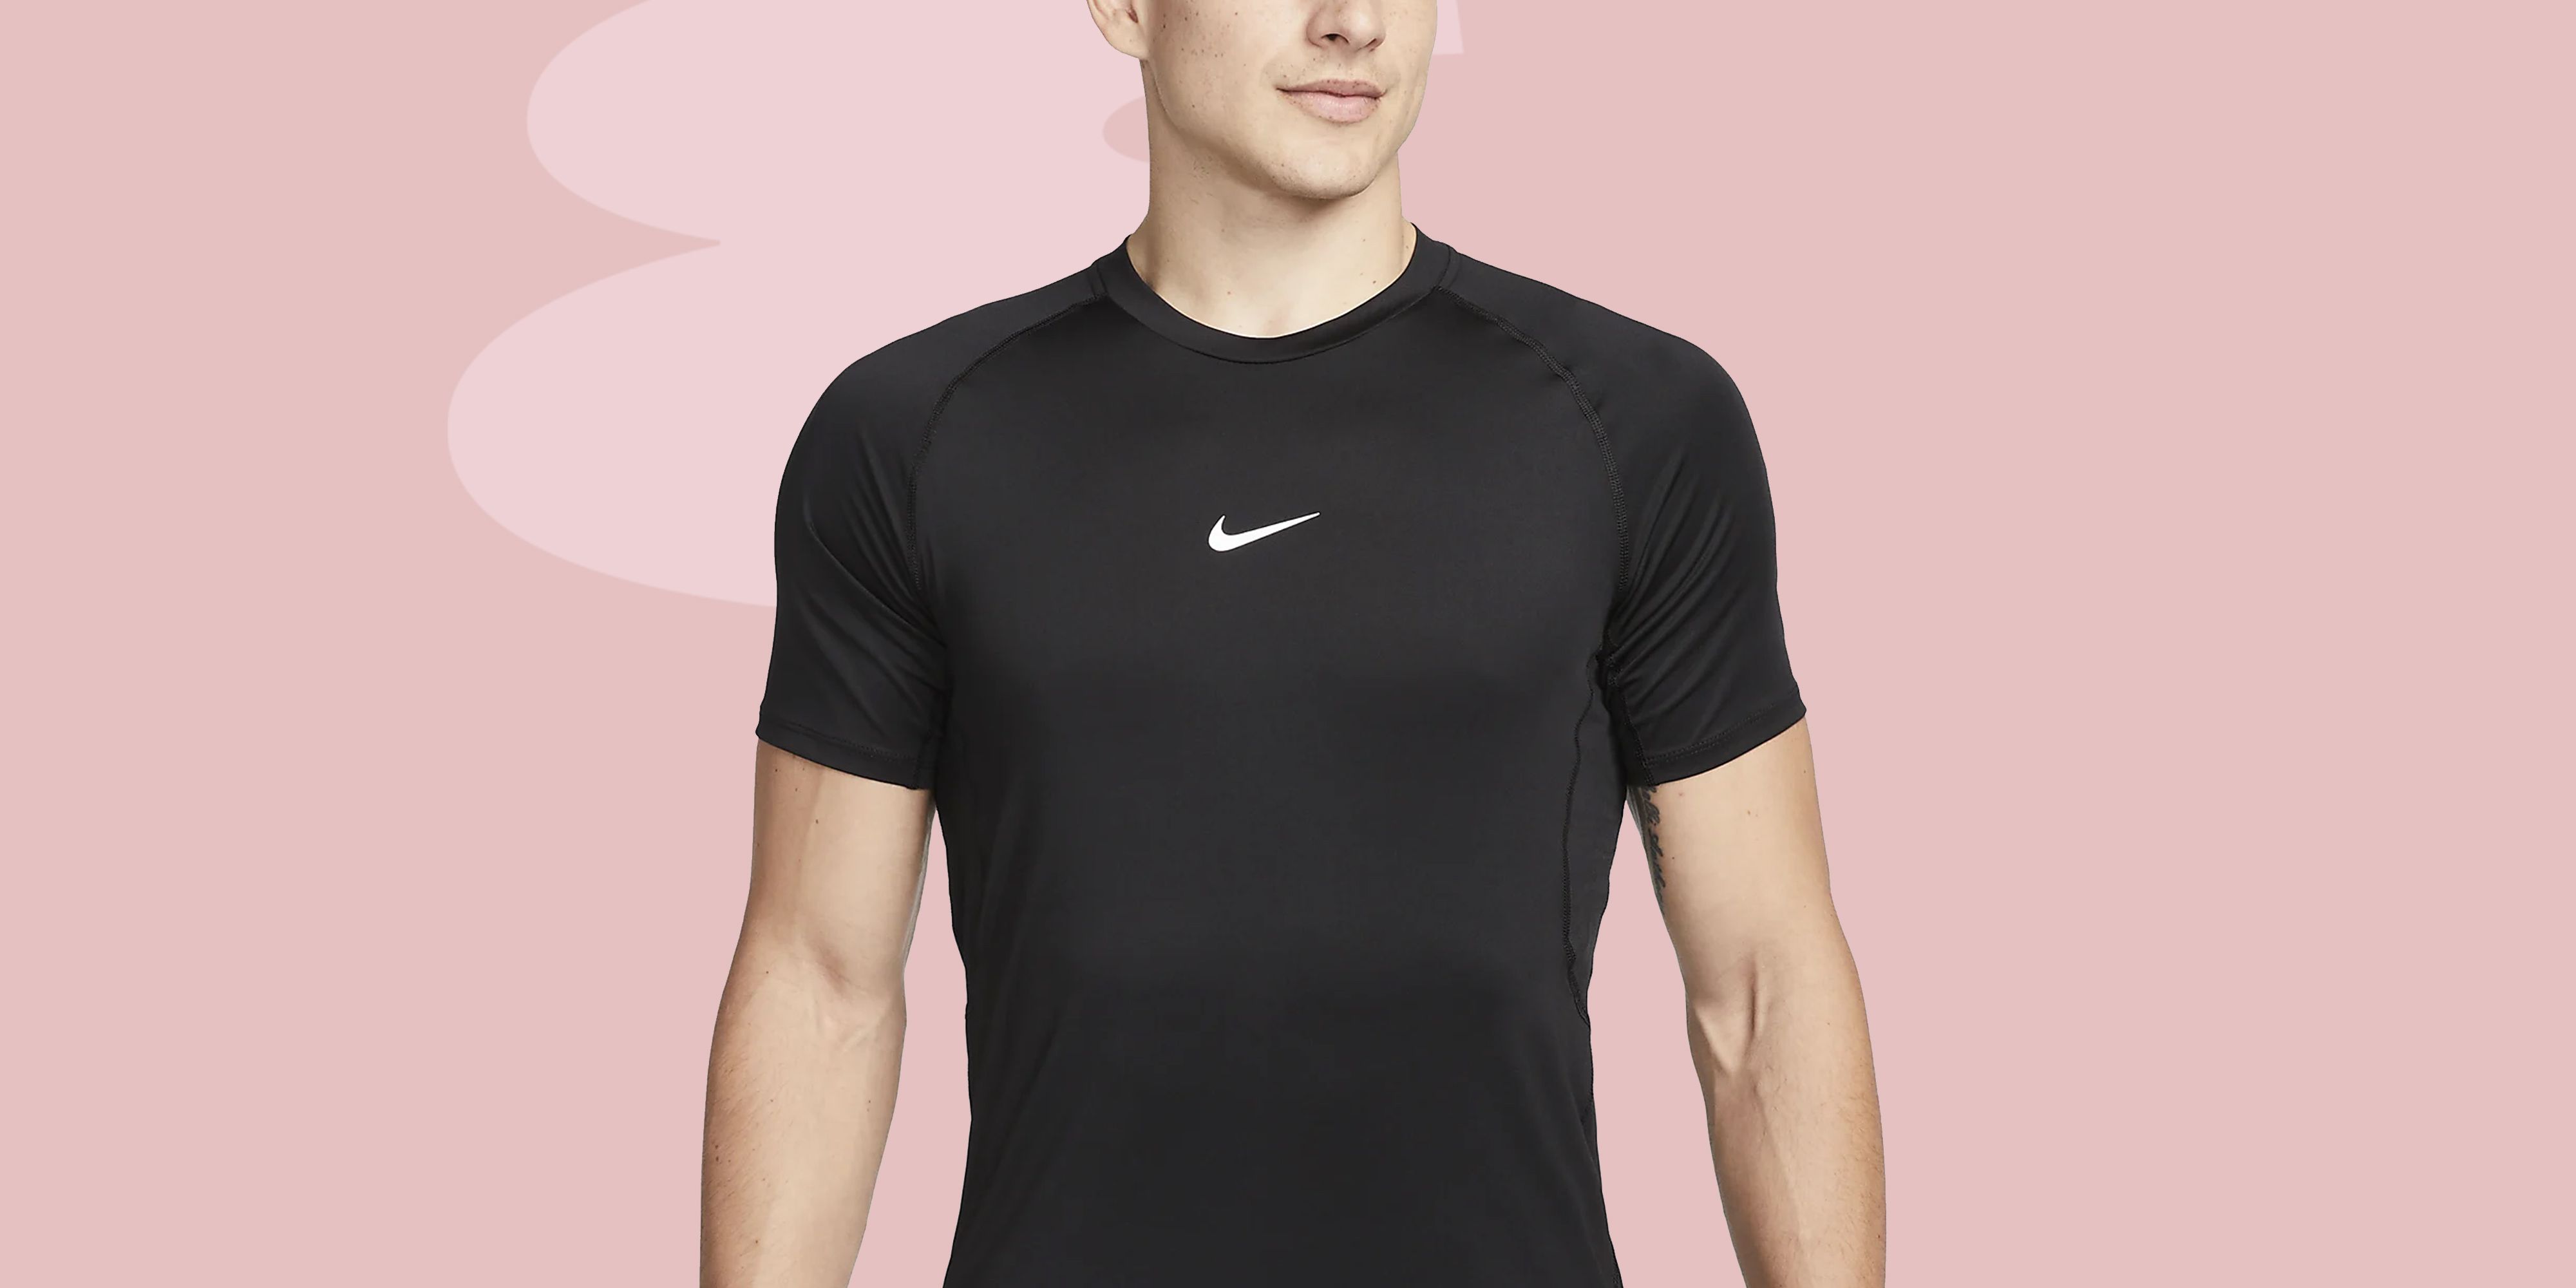 Womens Tops Moisture Wicking Tee Shirt Long Sleeve Crew Neck Running  Athletic T Shirt for Women Plus Size Slim Fit, Black, Medium